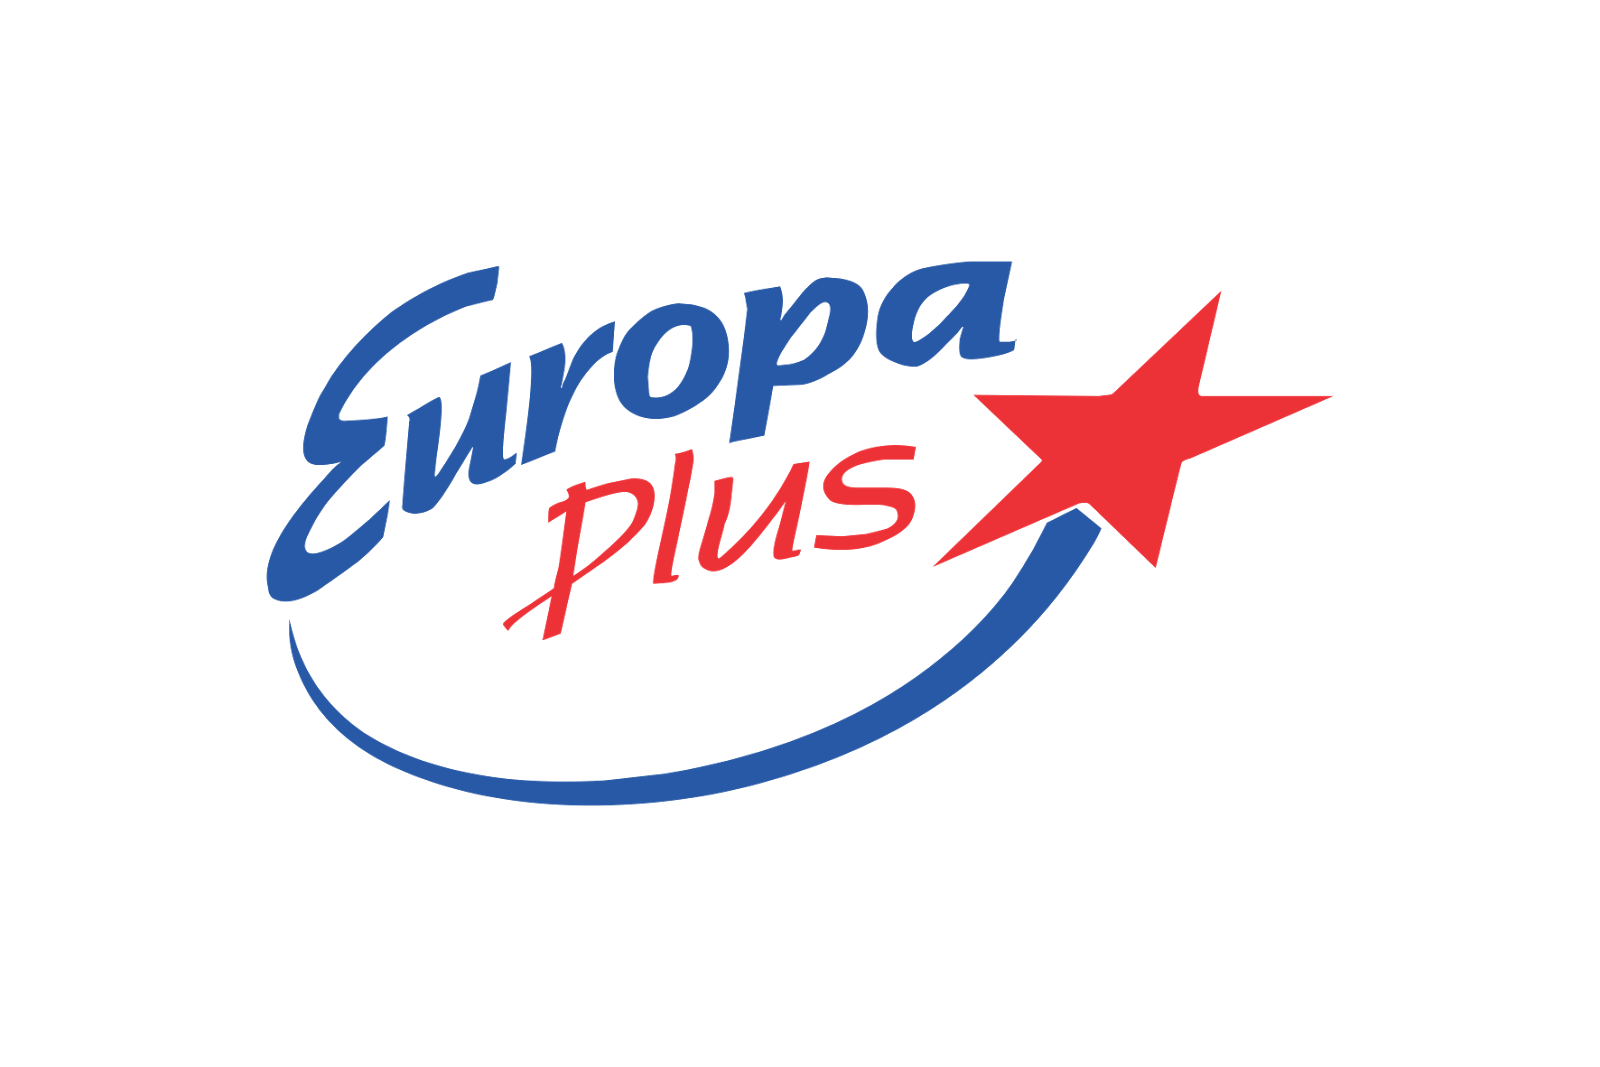 Европа плюс. Значок Европа плюс. Логотипы радиостанций. Радио Европа плюс лого.